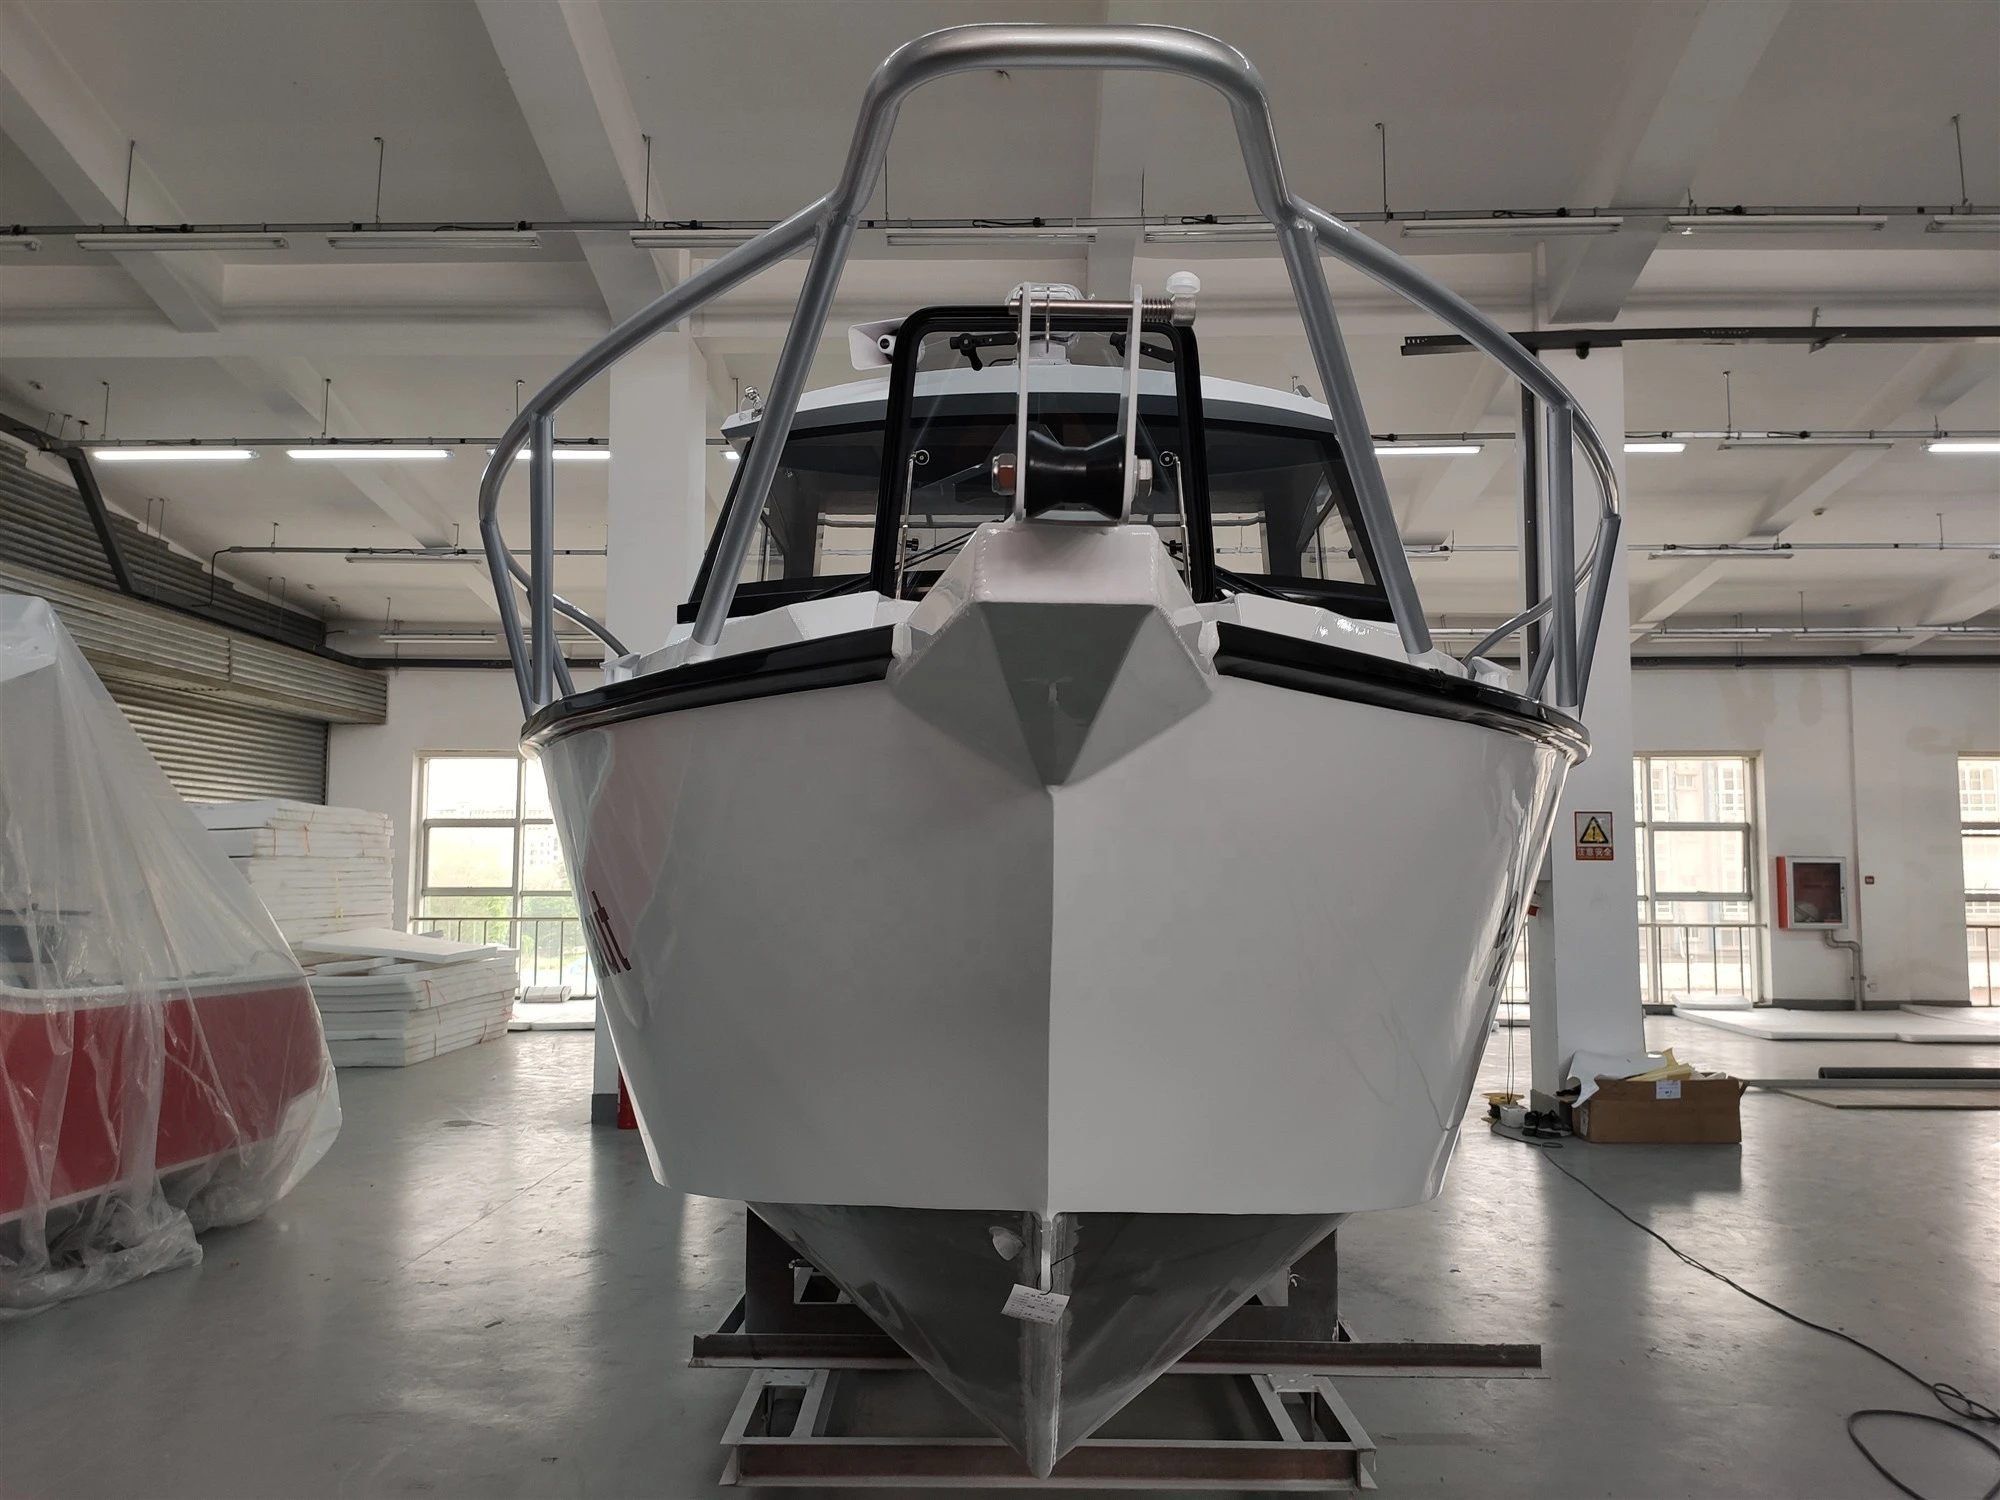 Buy Gospel 23ft /6.85m Cuddy Cabin Aluminum Fishing Boat -speed Boat from Qingdao  Gospel Boat Co., Ltd., China